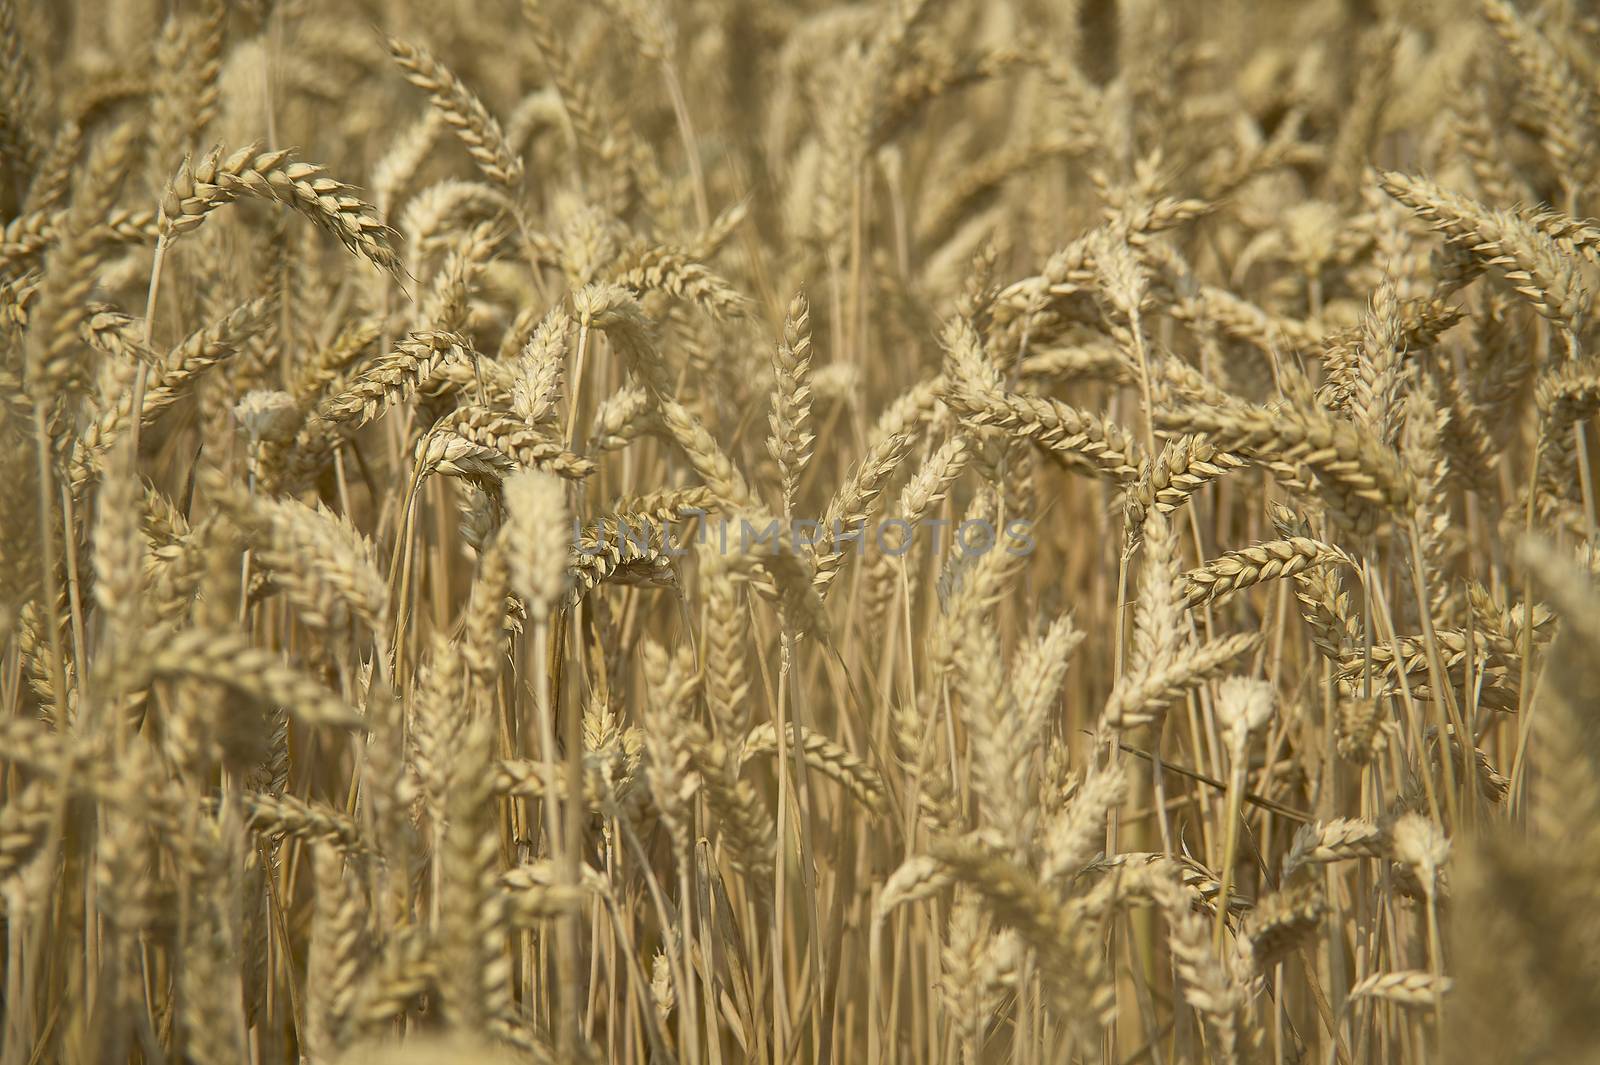 Grain of wheat by pippocarlot